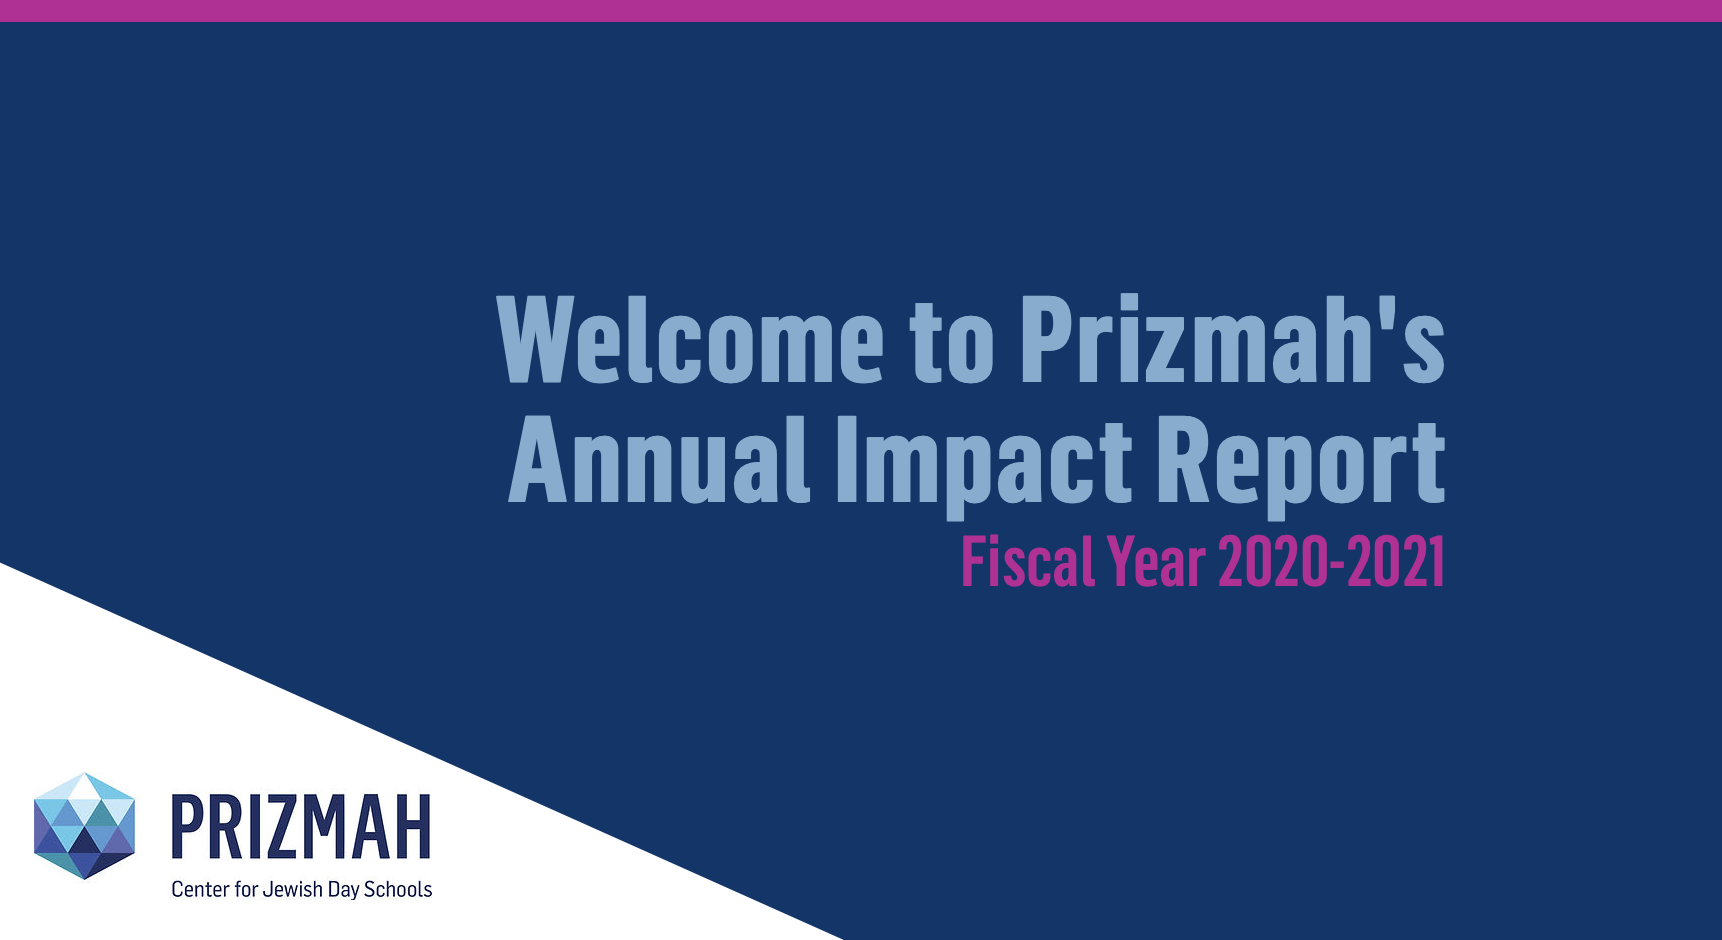 Prizmah's Annual Impact Report